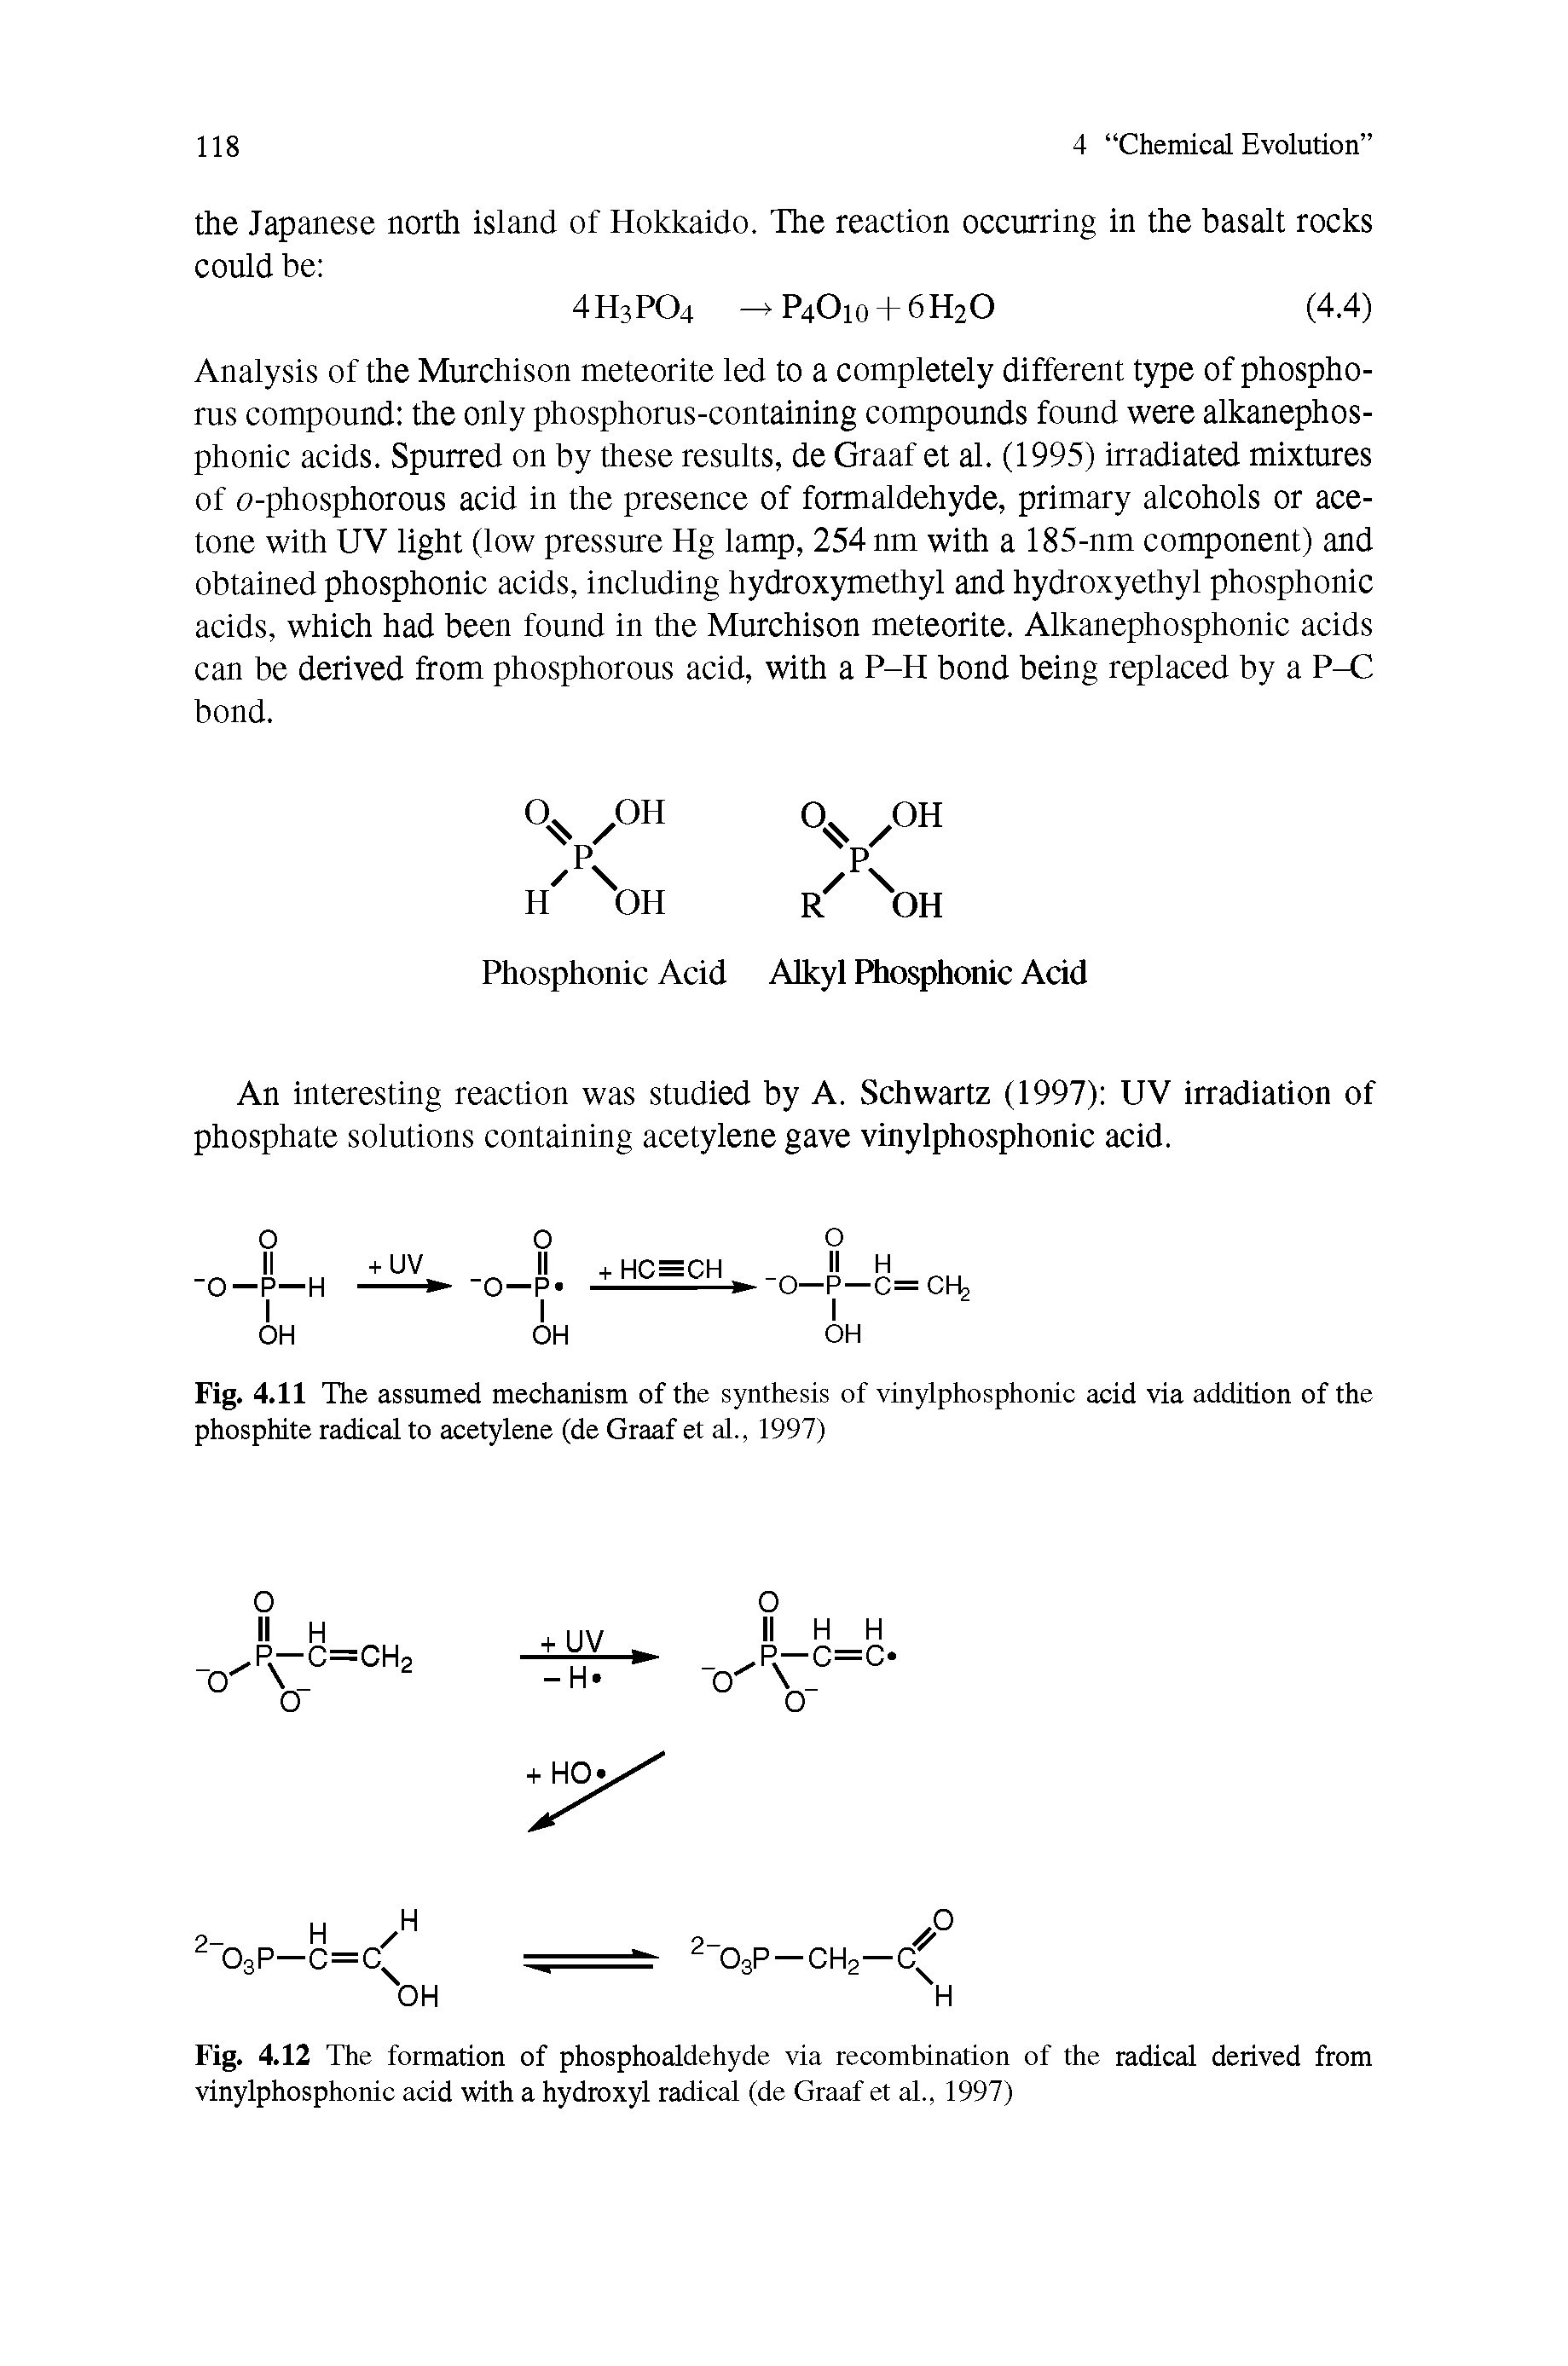 Fig. 4.11 The assumed mechanism of the synthesis of vinylphosphonic acid via addition of the phosphite radical to acetylene (de Graaf et al., 1997)...